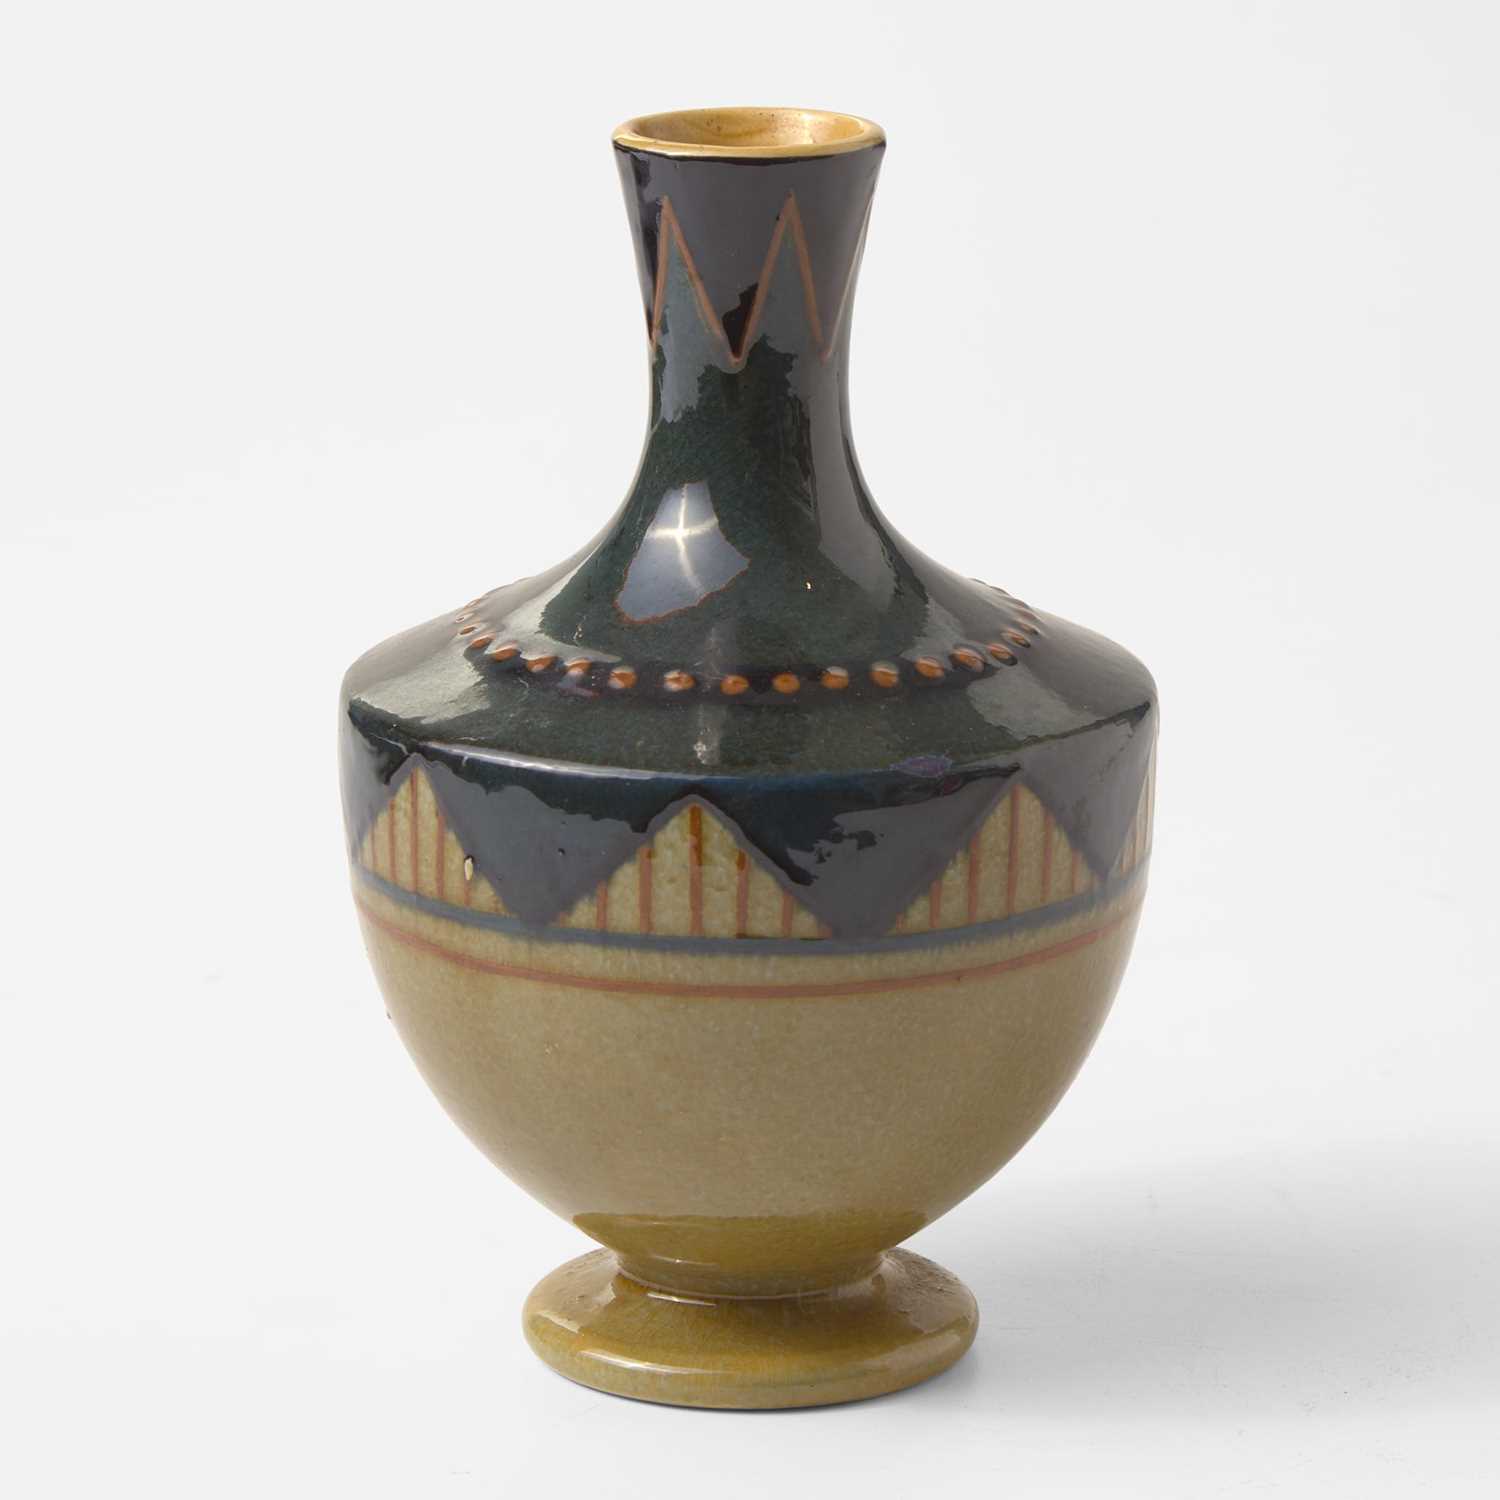 Lot 149 - A Wedgwood Art Ware Vase Designed by George Marsden